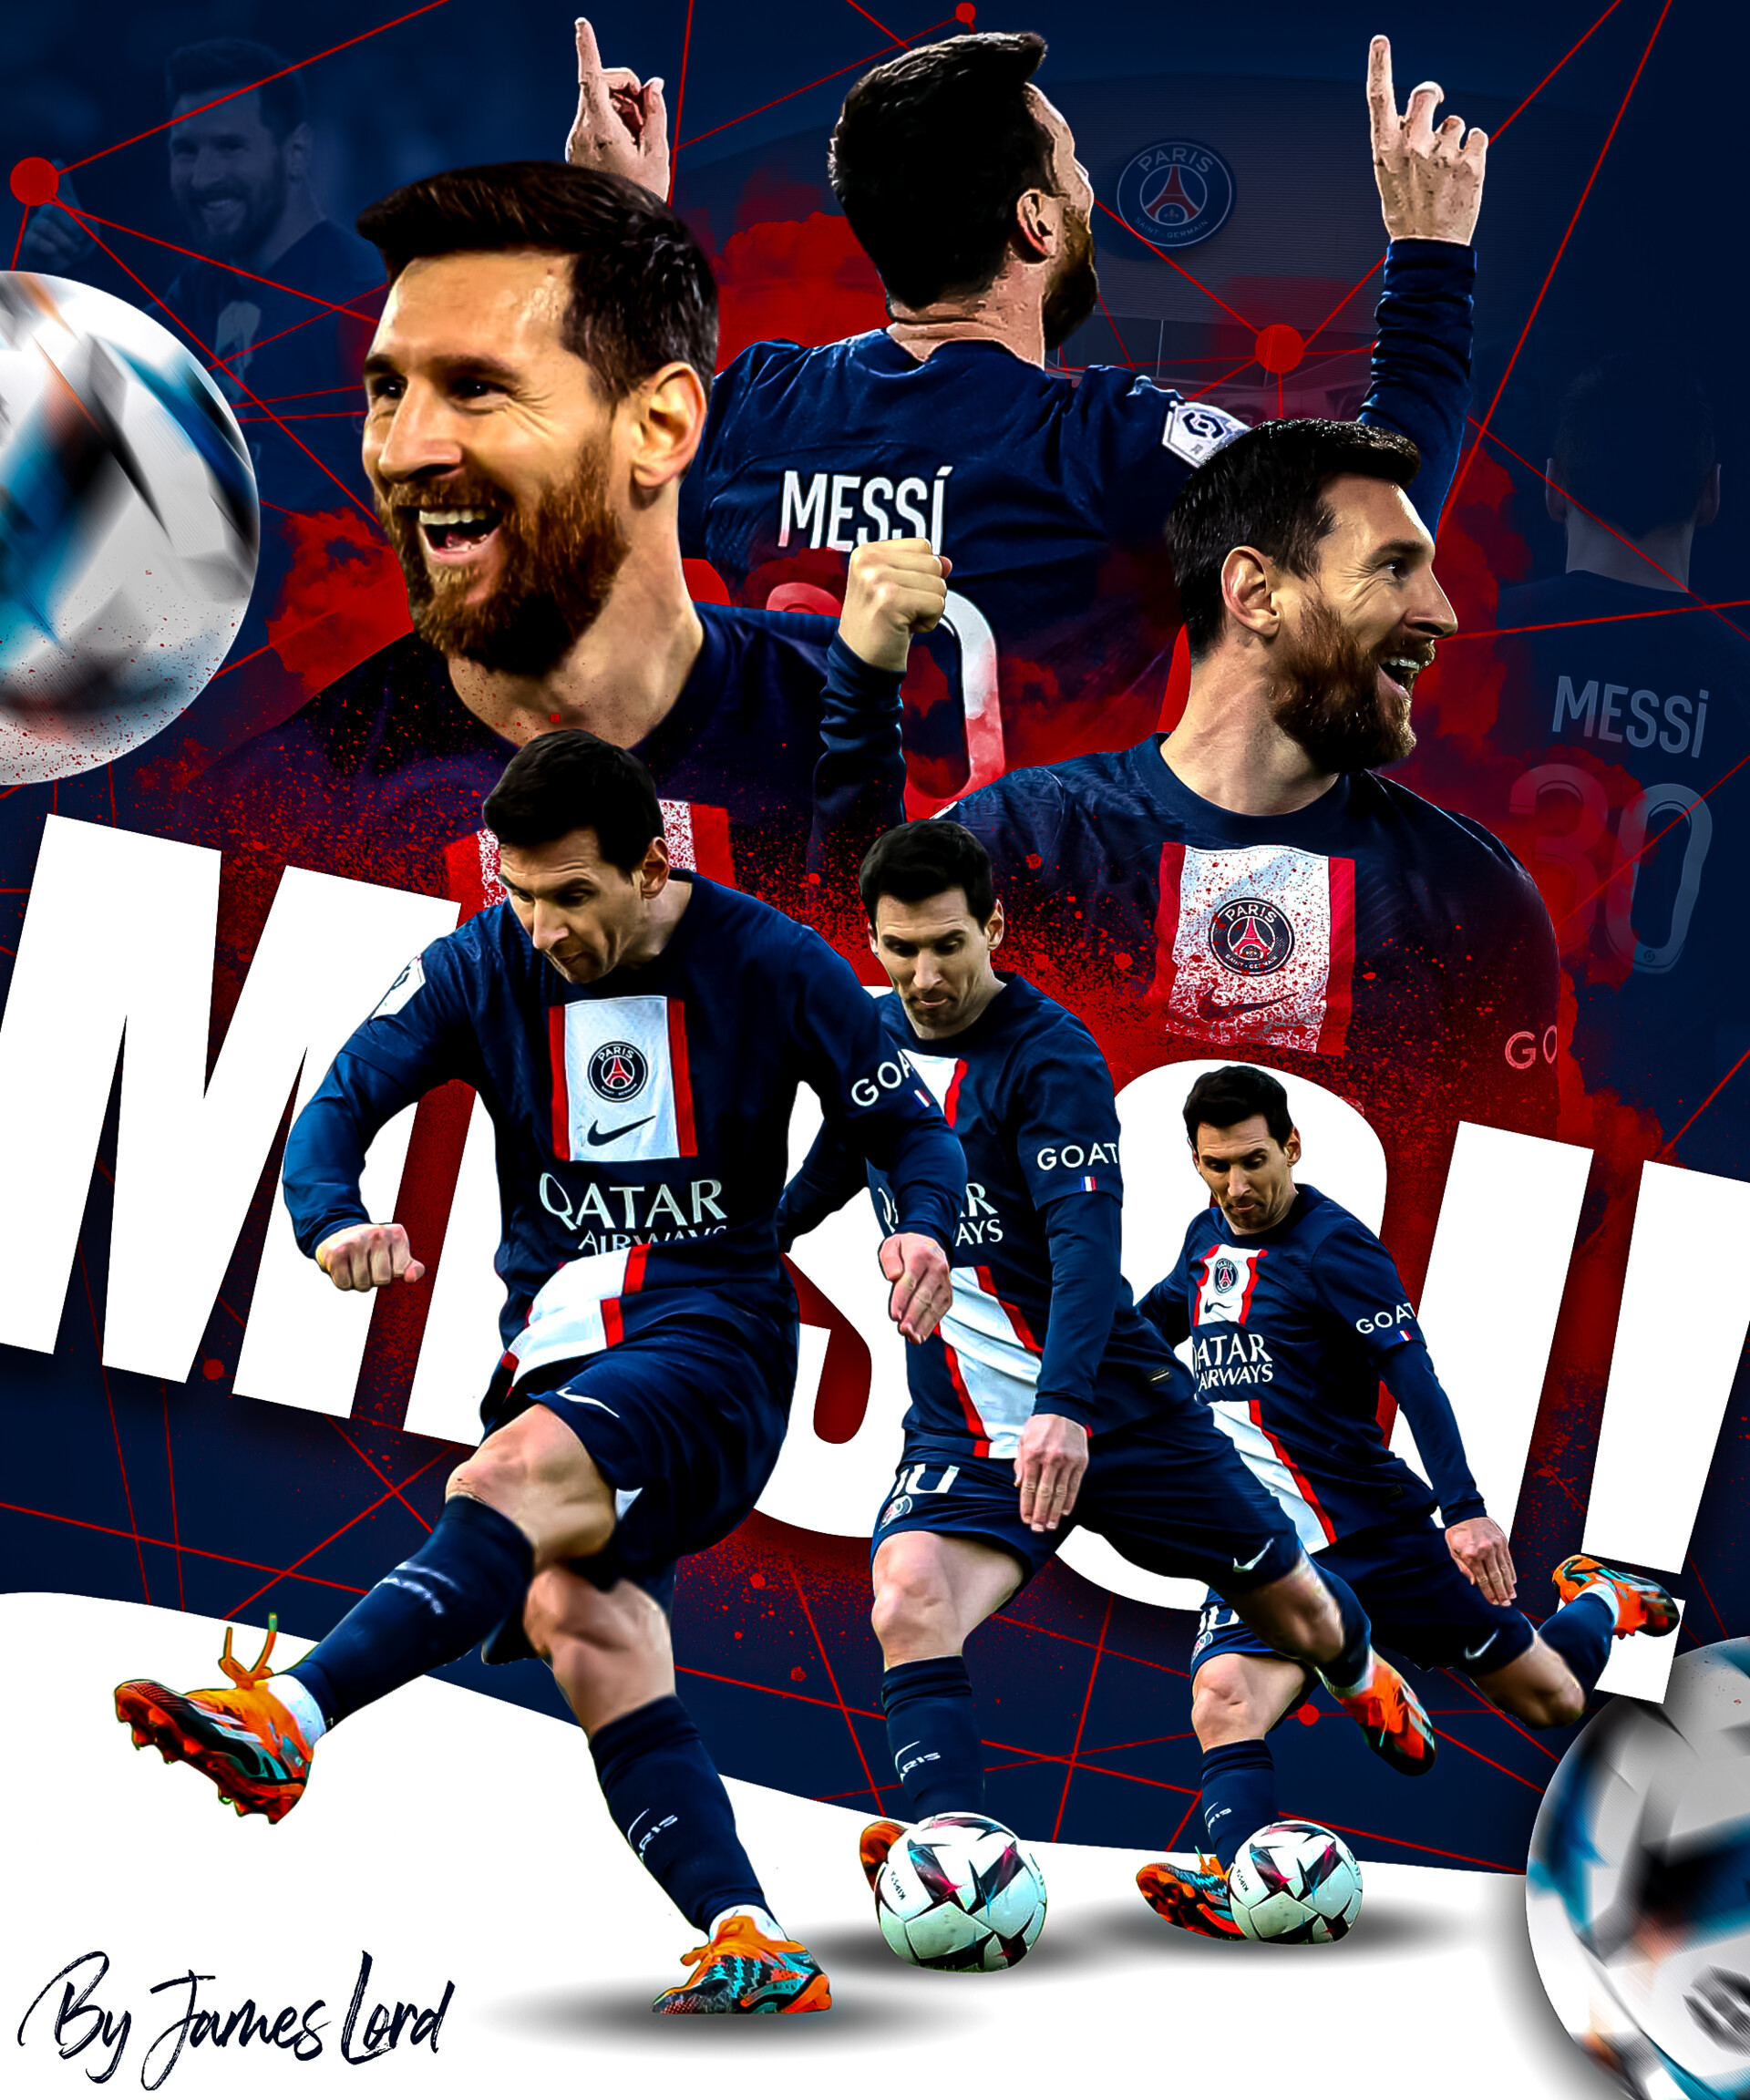 ArtStation - Leo Messi Poster